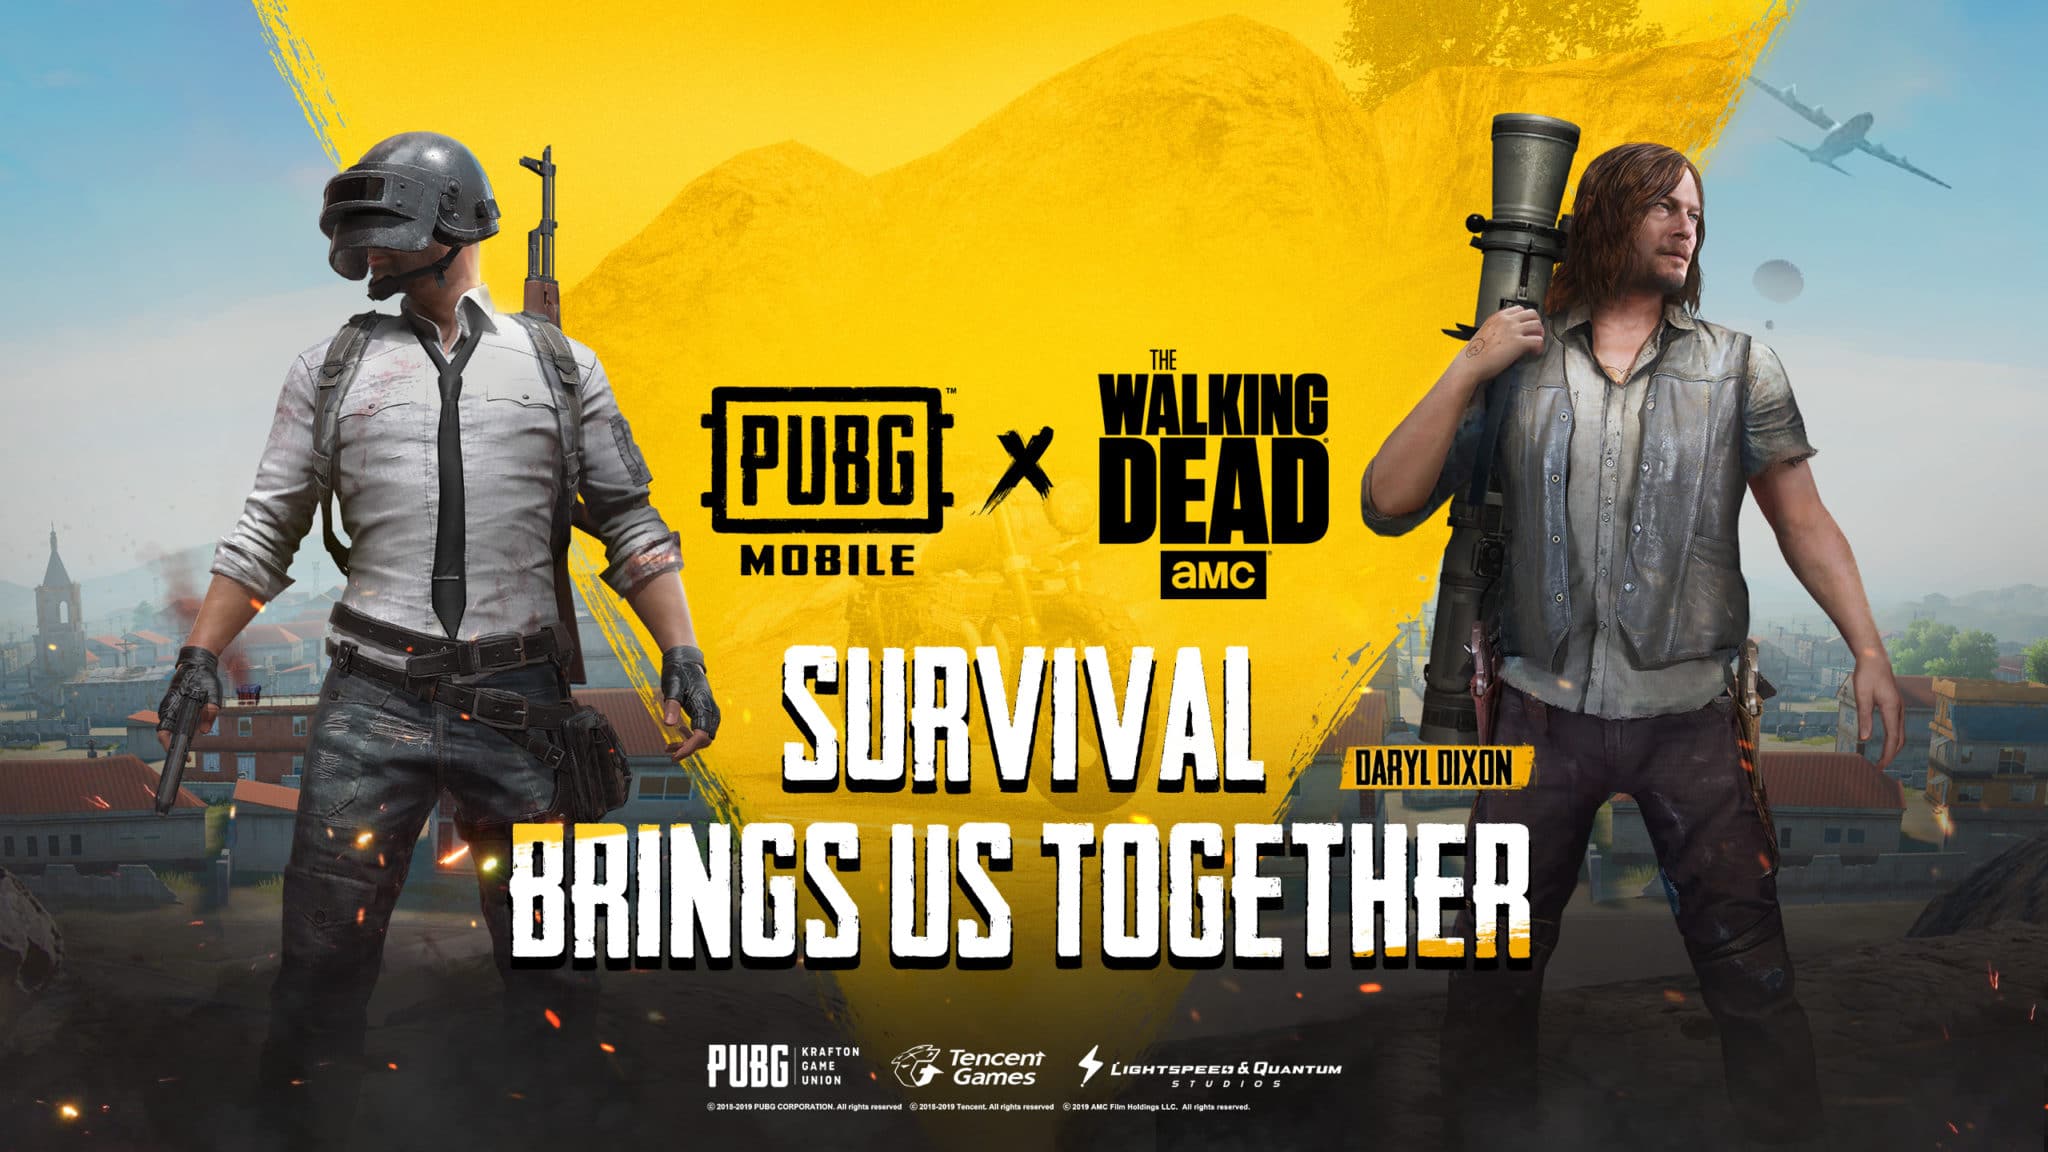 PUBG Mobile x The Walking Dead